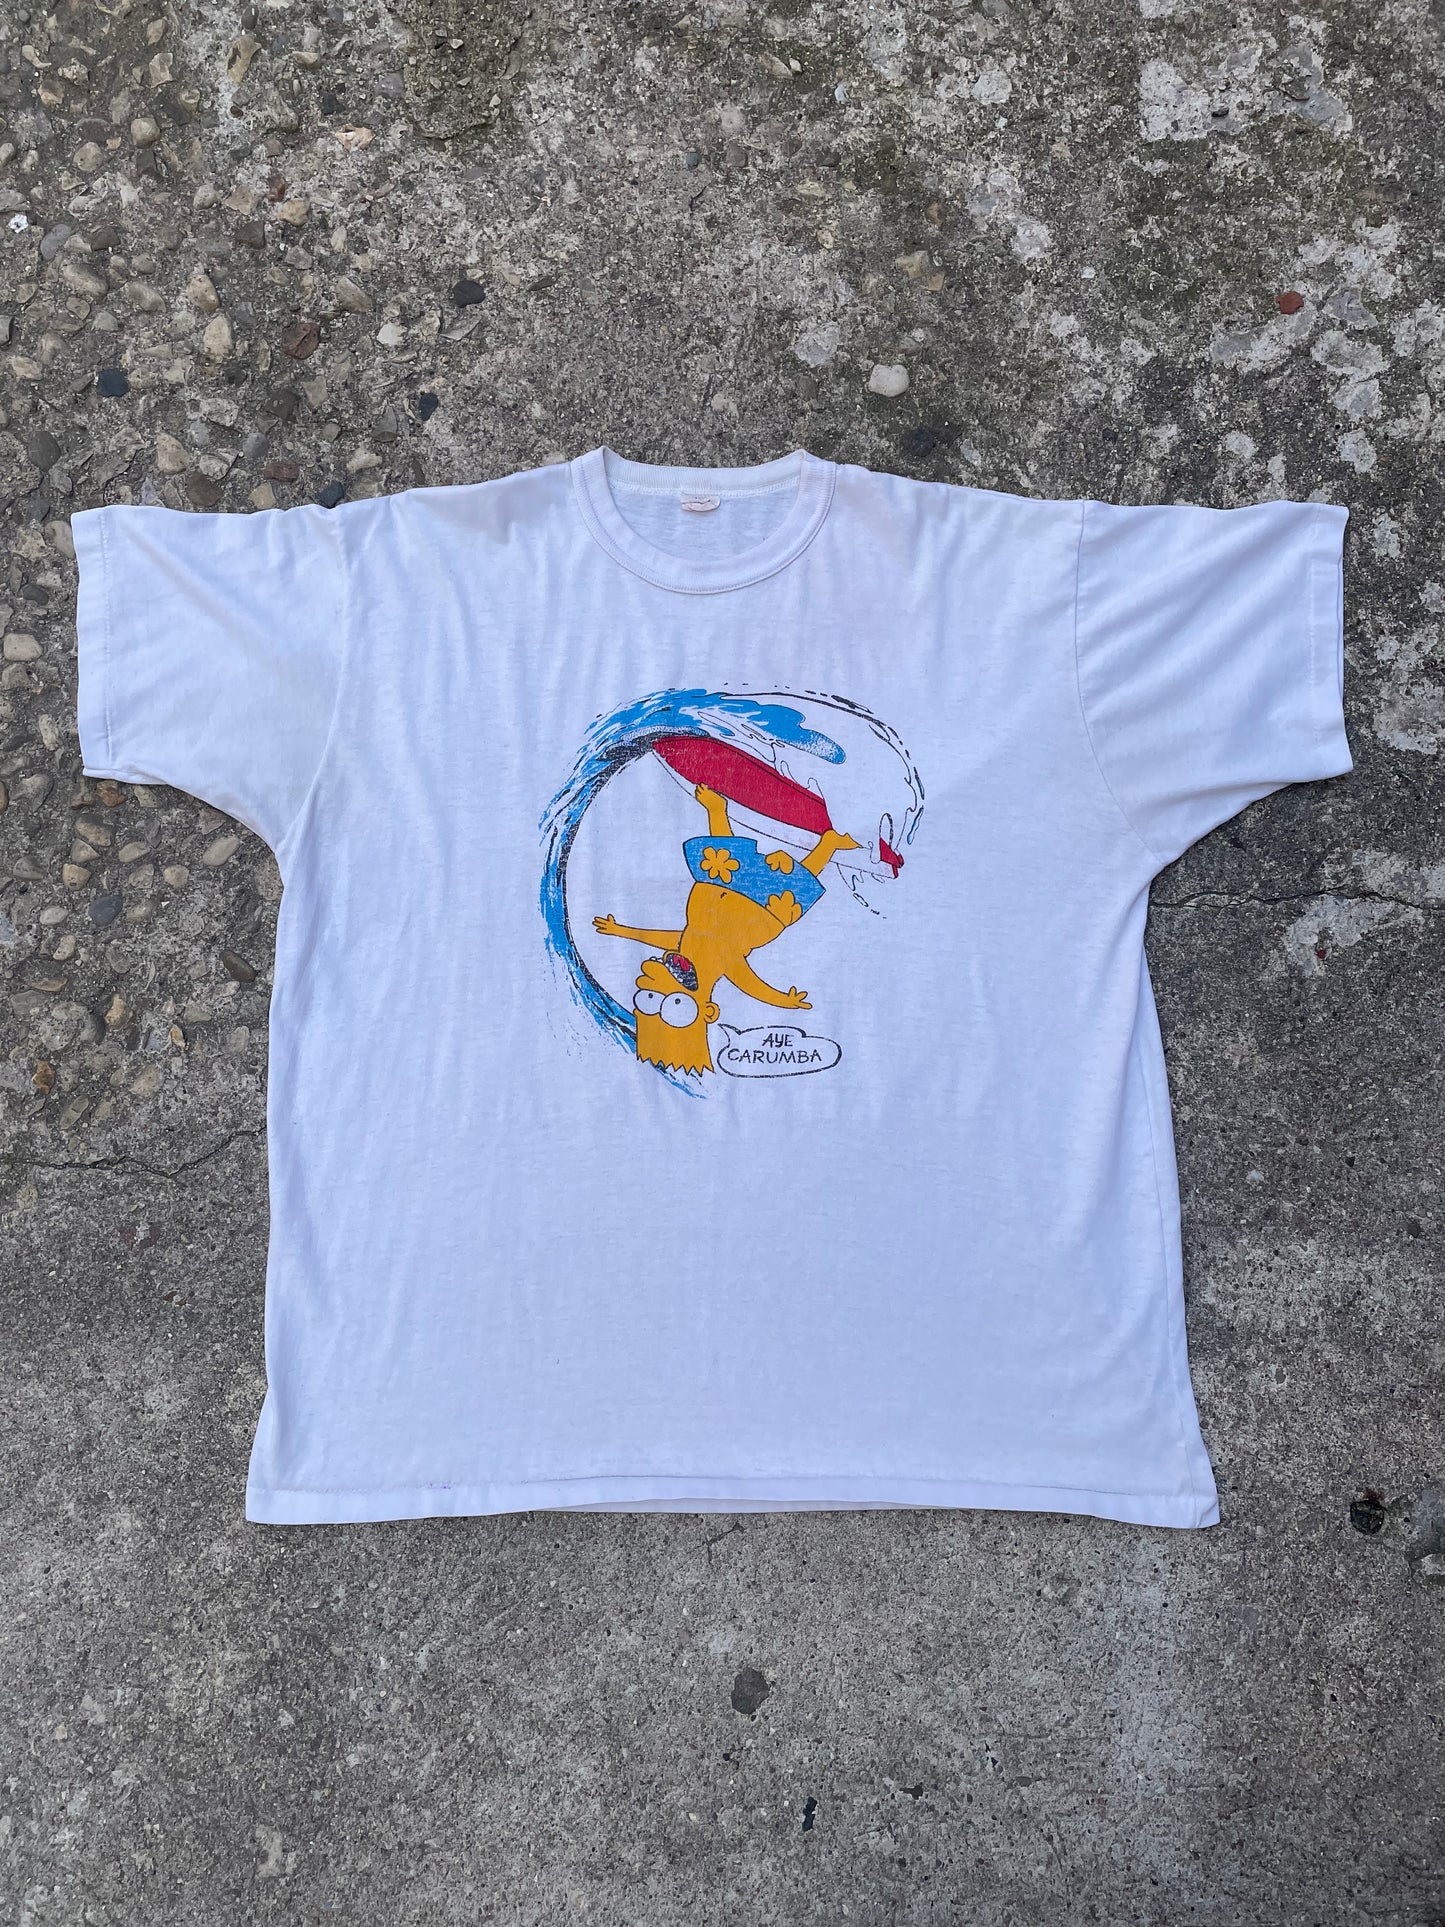 1990's 'Aye Carumba' Bootleg Bart Simpson's T-Shirt - XL